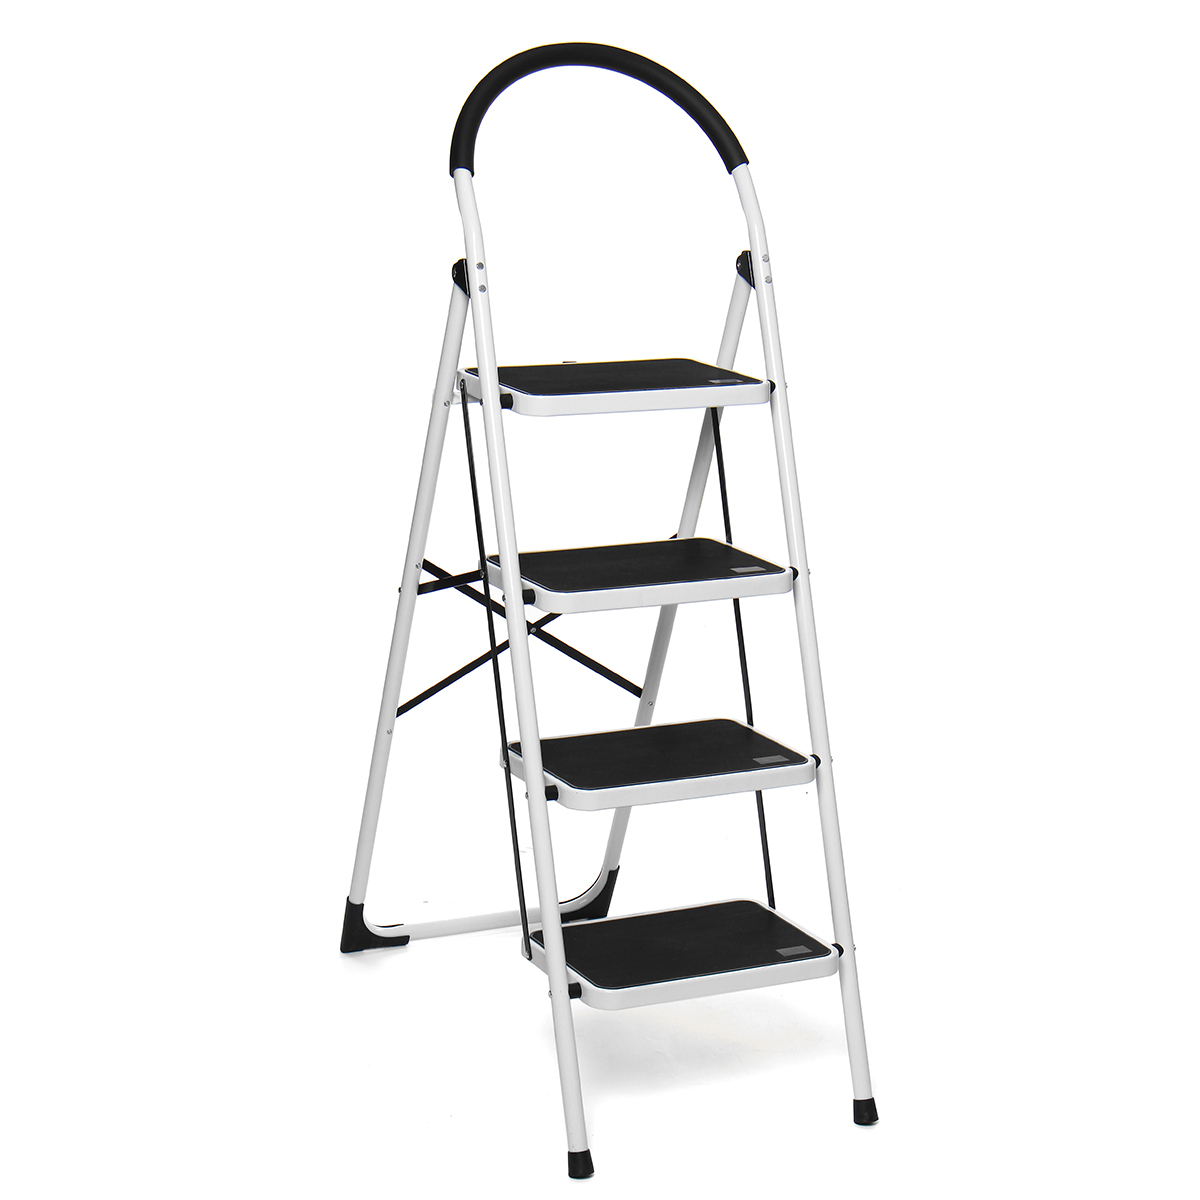 

4 Step Folding Aluminium Ladder Non-slip Handrail Work Platform Stool 330lb Capacity